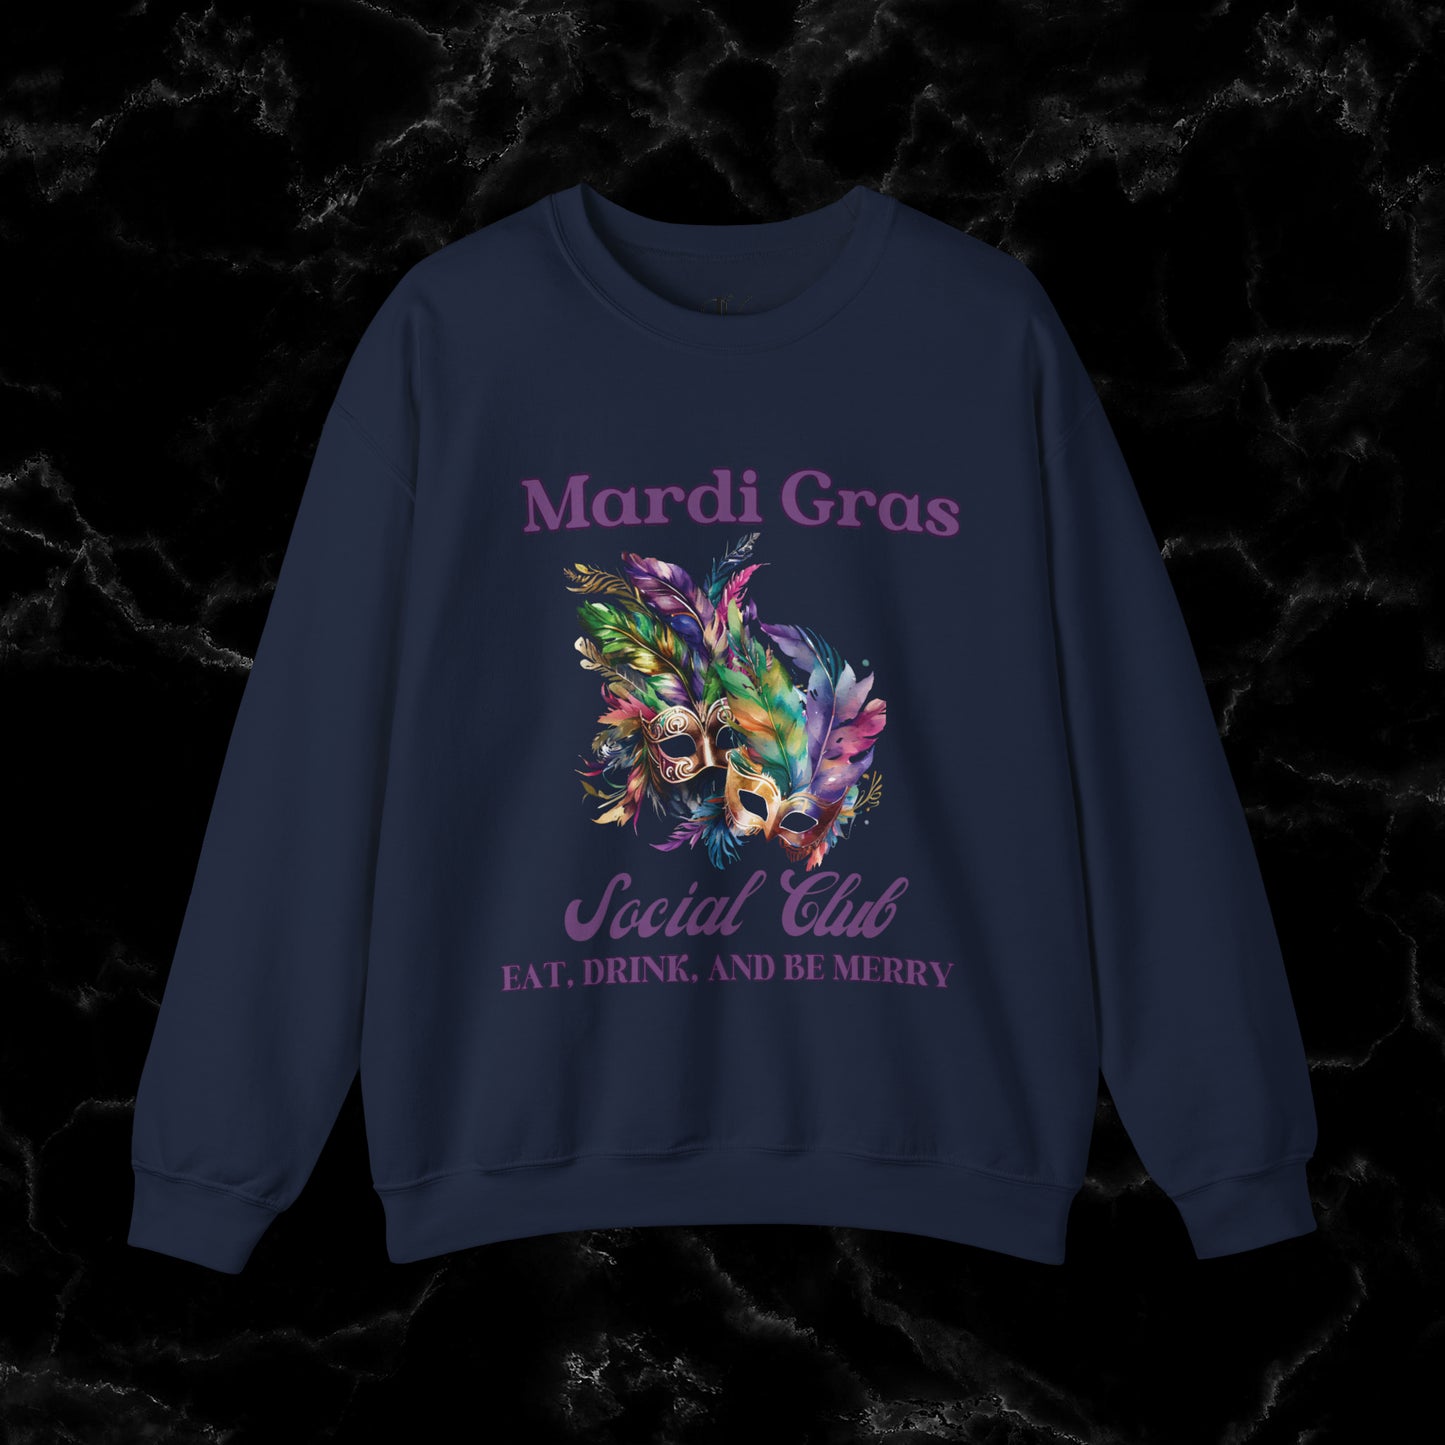 Mardi Gras Sweatshirt Women - NOLA Luxury Bachelorette Sweater, Unique Fat Tuesday Shirt, Louisiana Girls Trip Sweater, Mardi Gras Social Club Chic Sweatshirt S Navy 